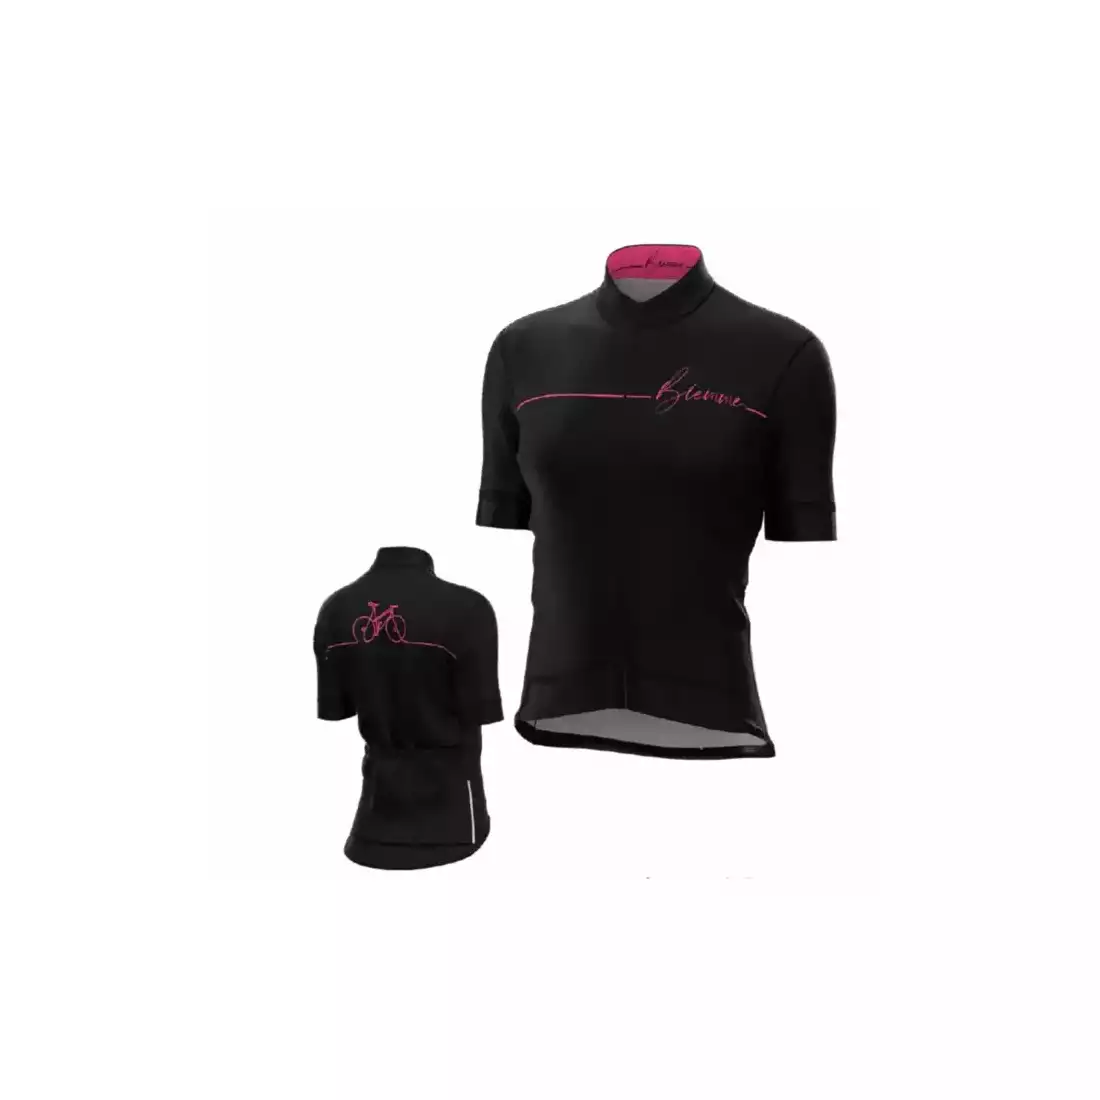 Biemme BIKE women's cycling jersey, black and pink